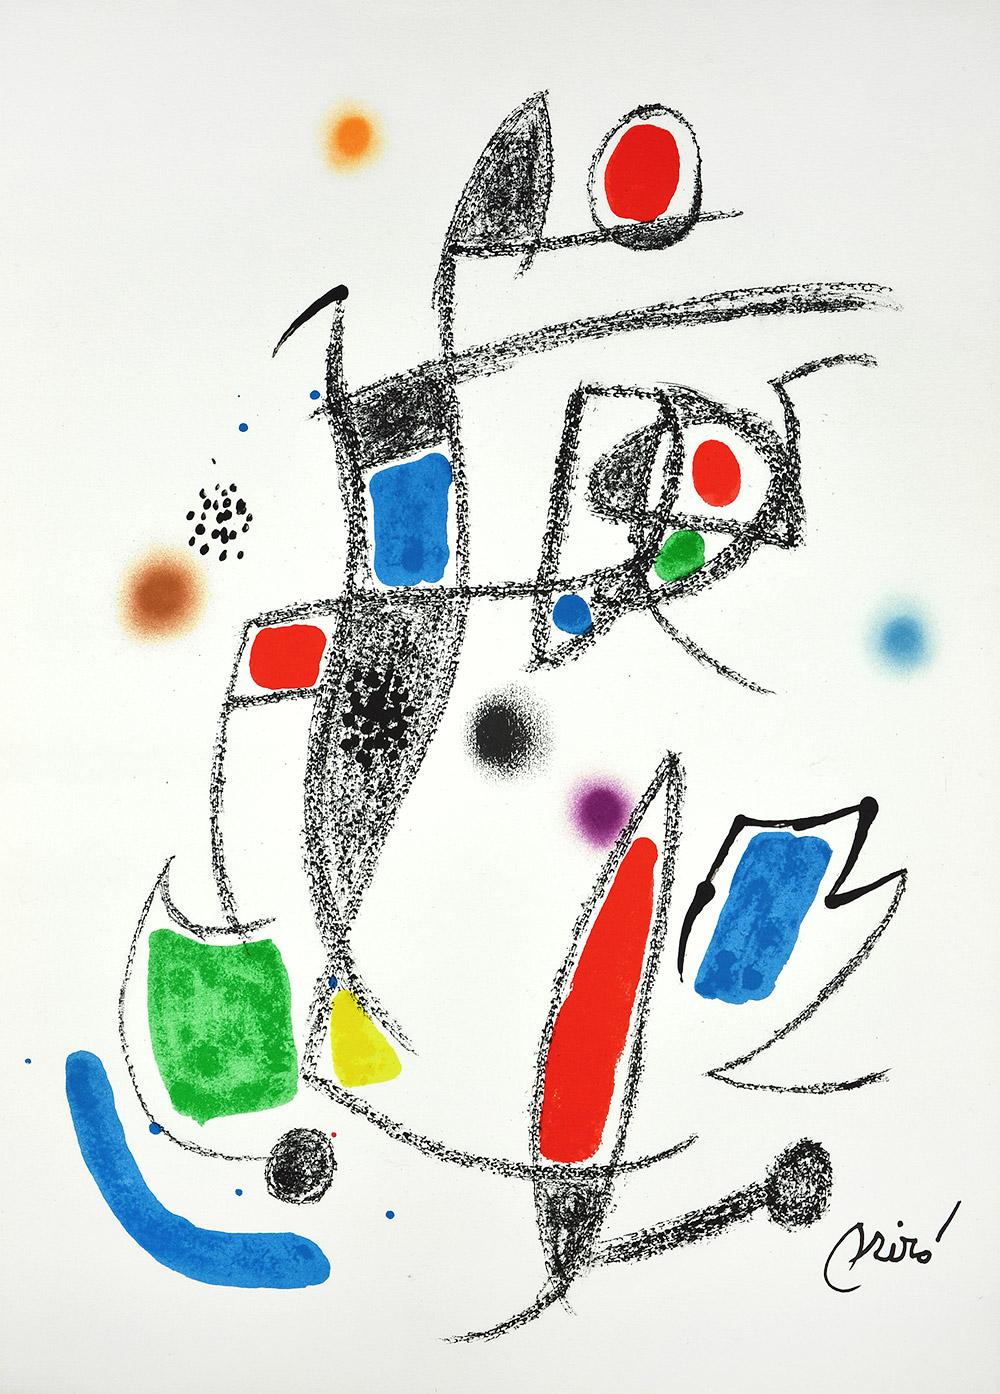 Joan Miró - Maravillas con variaciones acrósticas en el jardín de Miró X
Date of creation: 1975
Medium: Lithograph on Gvarro paper
Edition: 1500
Size: 49,5 x 35,5 cm
Condition: In very good conditions and never framed
Observations:
Lithograph on